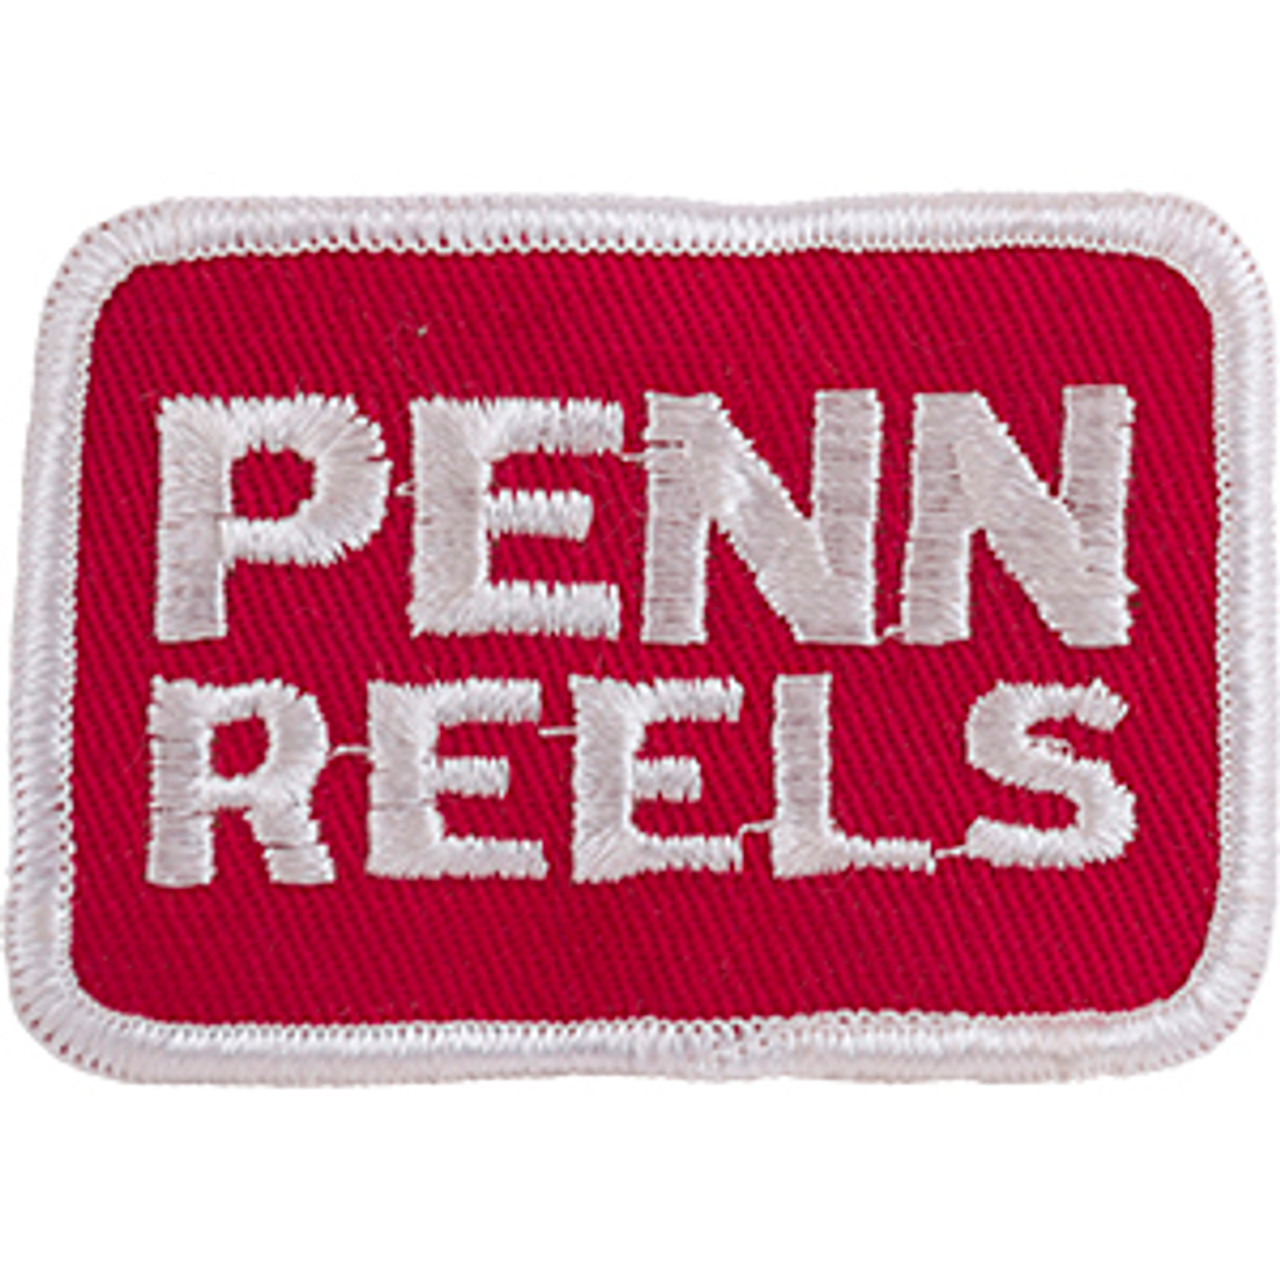 Penn Reels Round Patch. By Artistshot